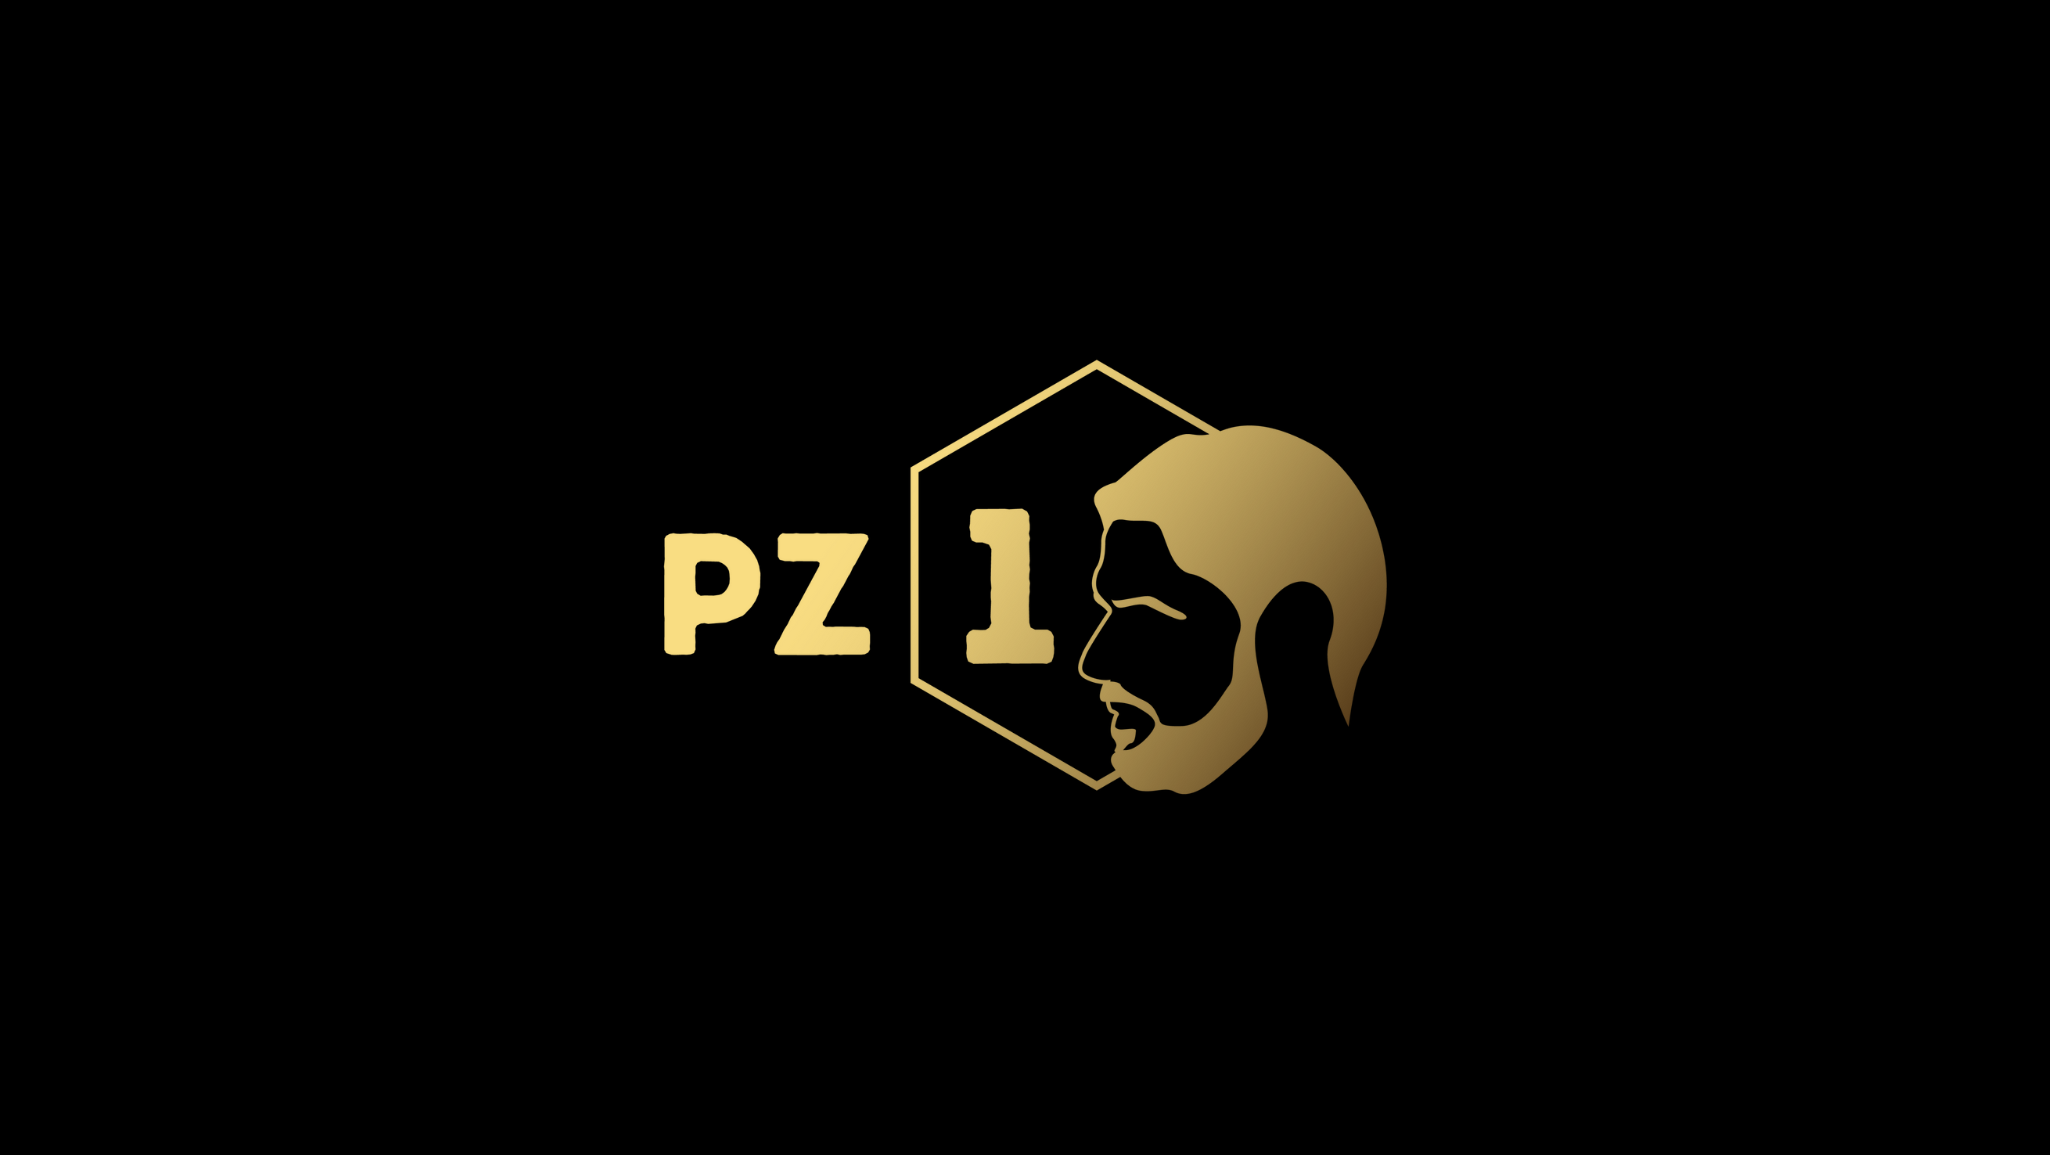 Pascal Zuberbühler PZ1